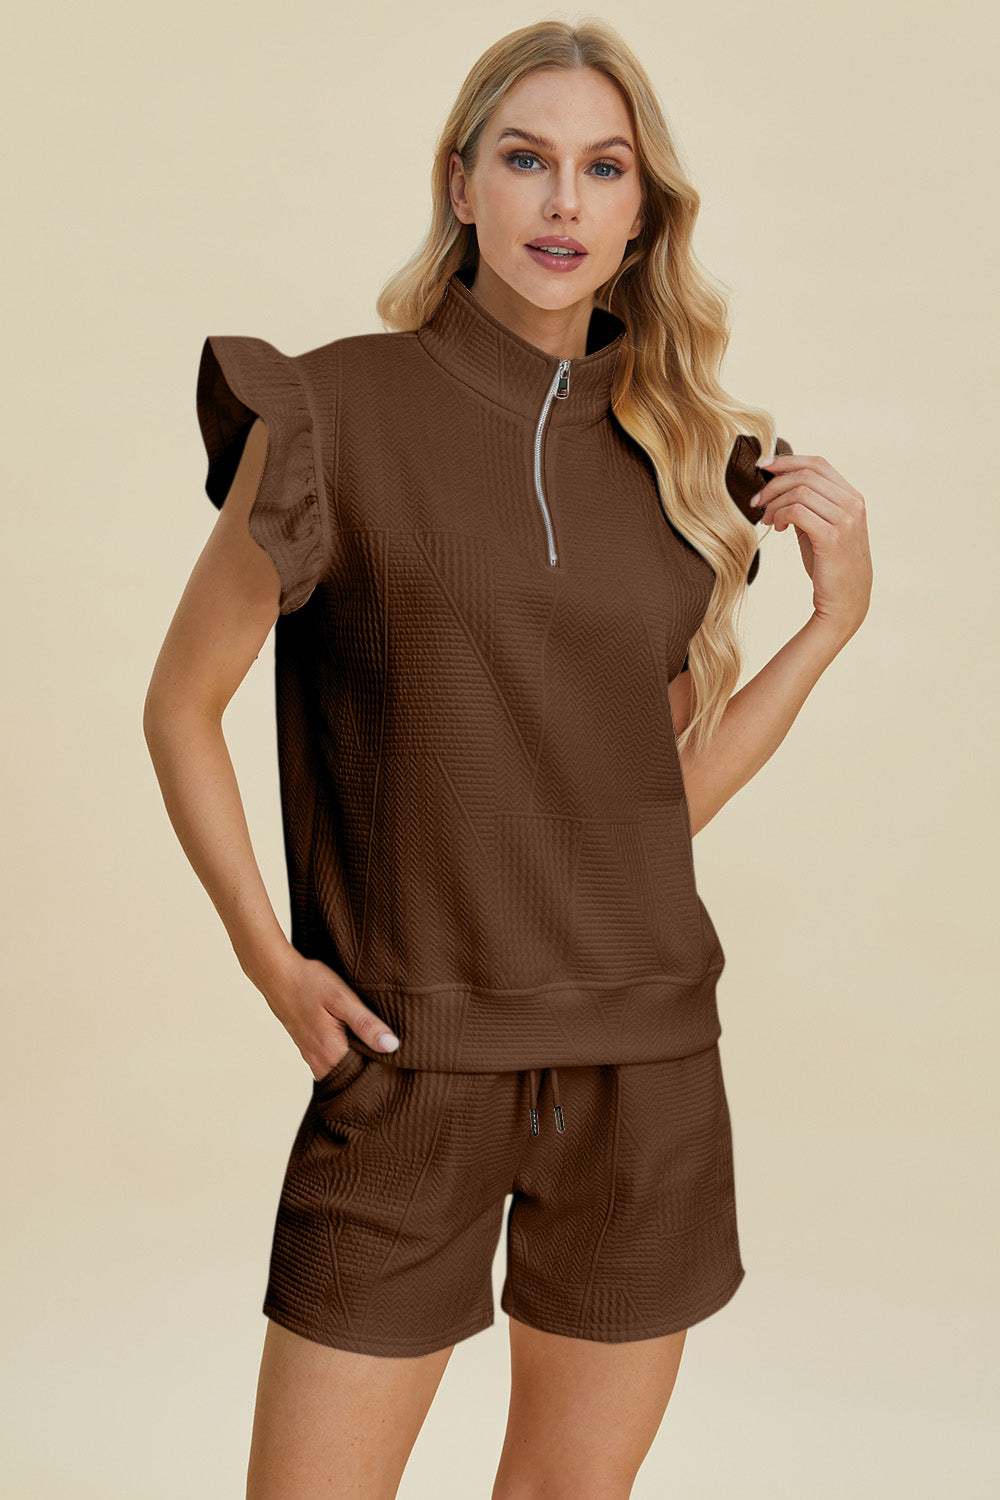 TEEK - Ruffled Textured Sleeve Top Shorts Set SET TEEK Trend Brown S 